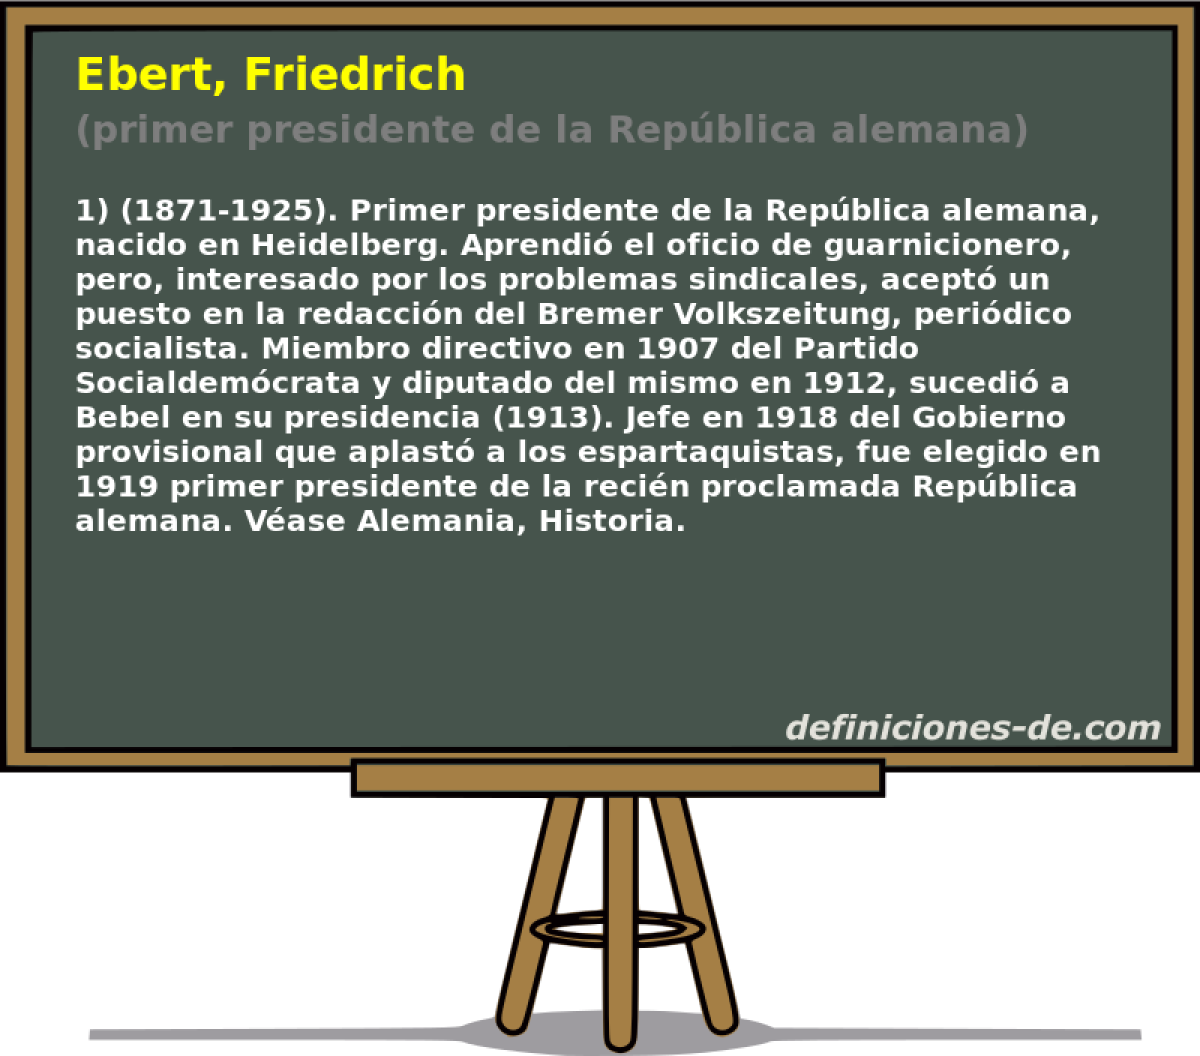 Ebert, Friedrich (primer presidente de la Repblica alemana)